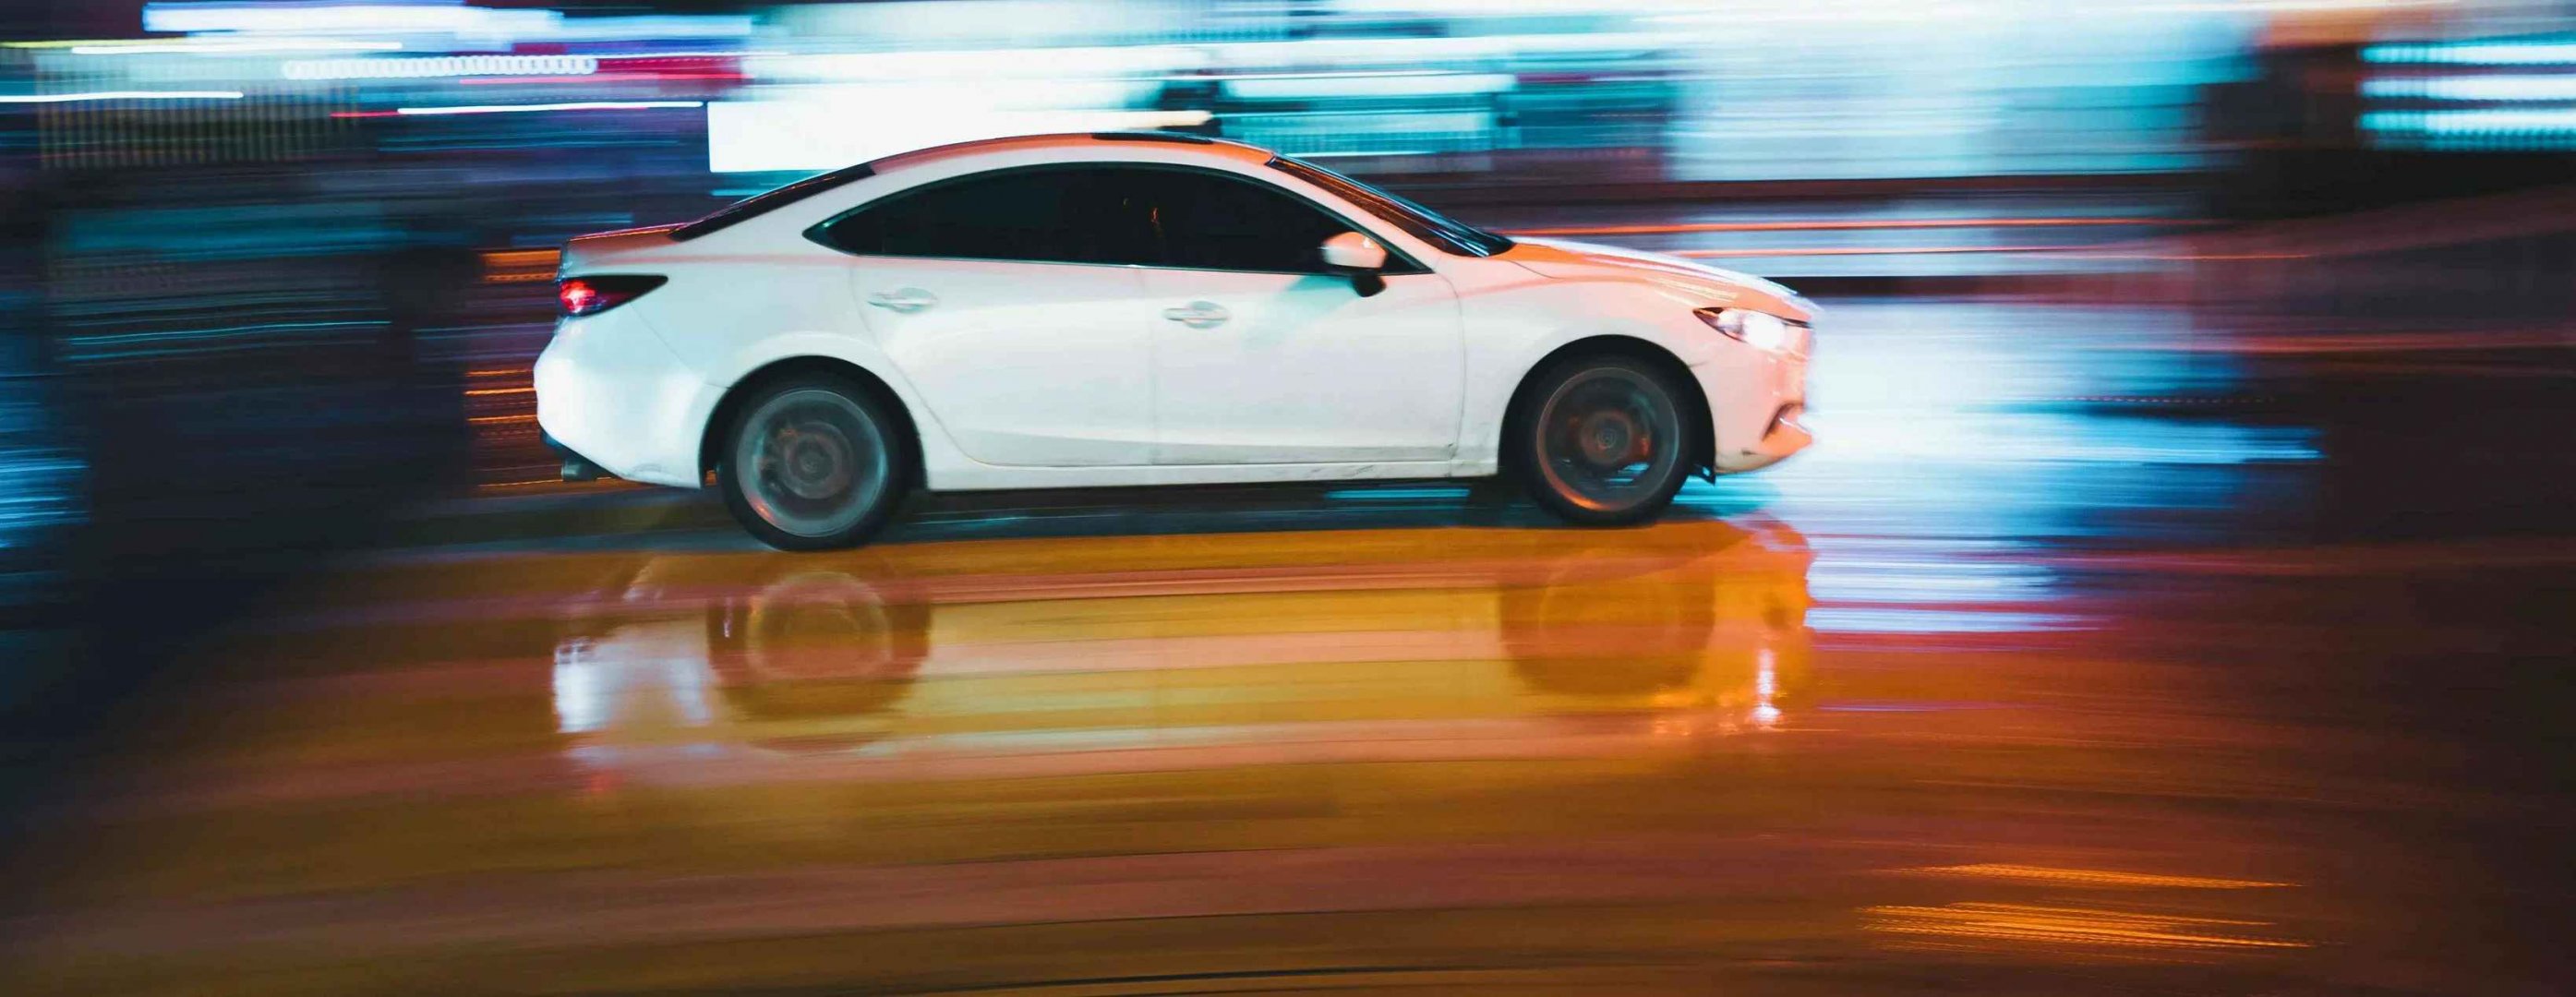 Car driving - background blurred - timelapse effect.jpg